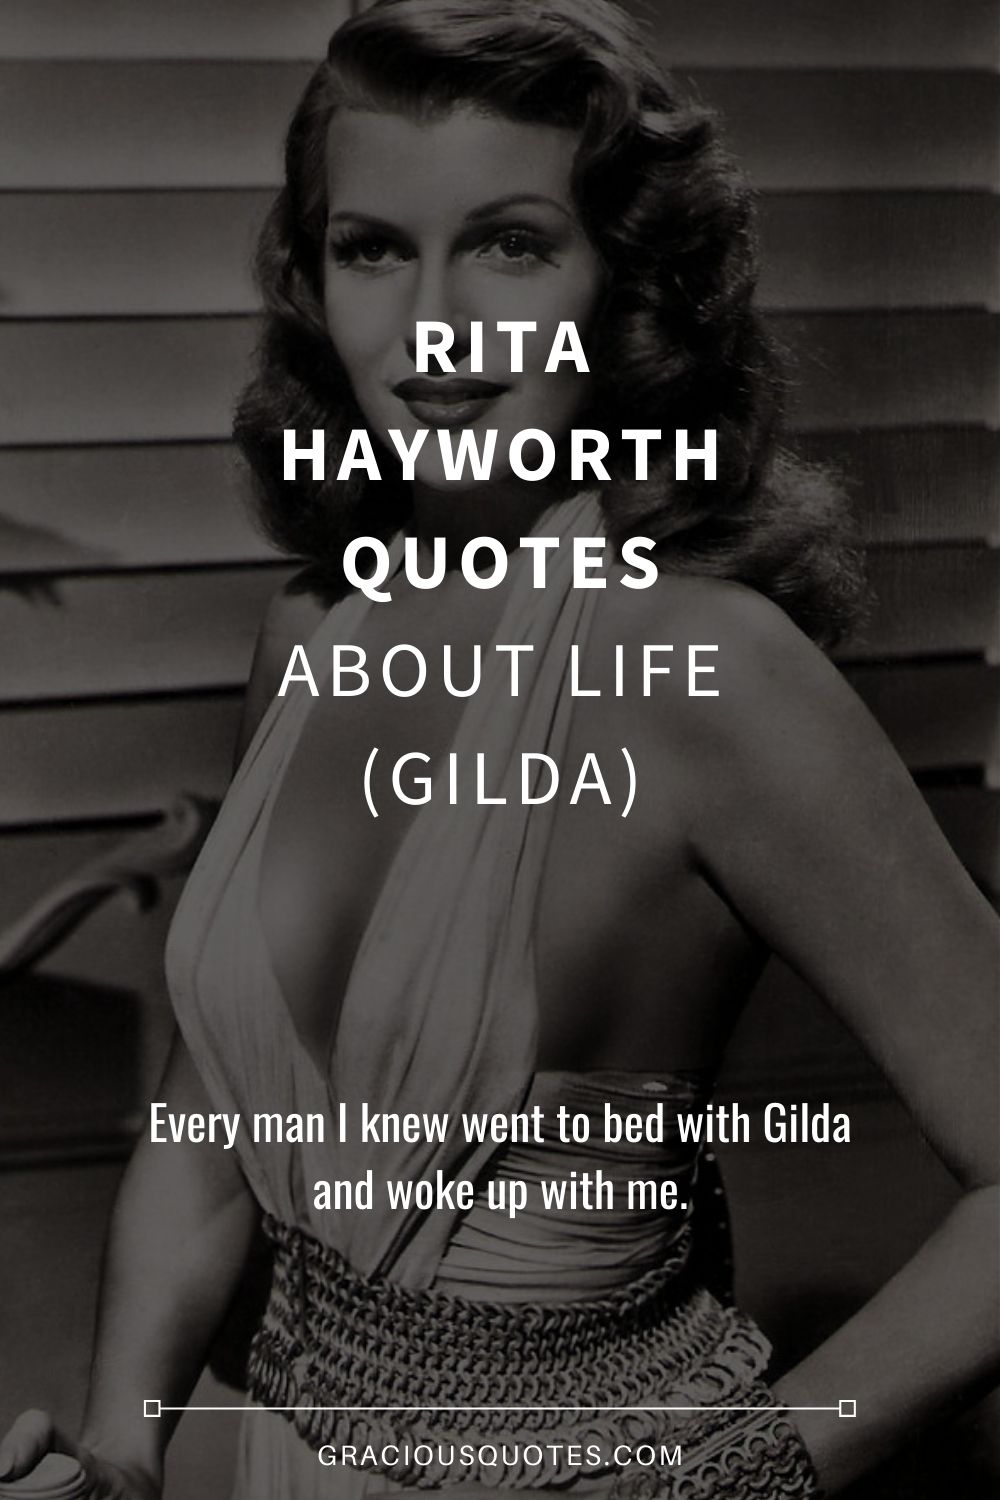 Rita Hayworth Quotes About Life (GILDA) - Gracious Quotes